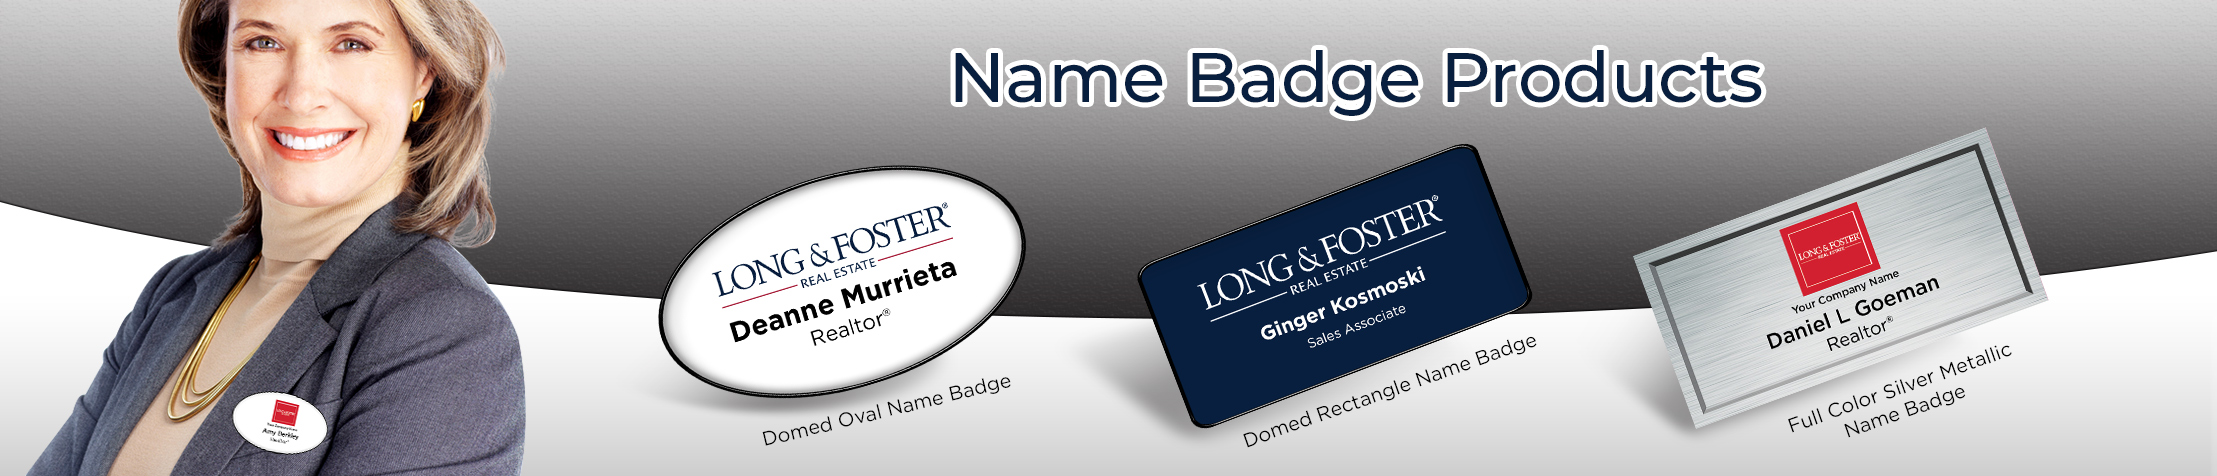 Long and Foster Real Estate Name Badge Products - Long and Foster Real Estate Name Tags for Realtors | BestPrintBuy.com